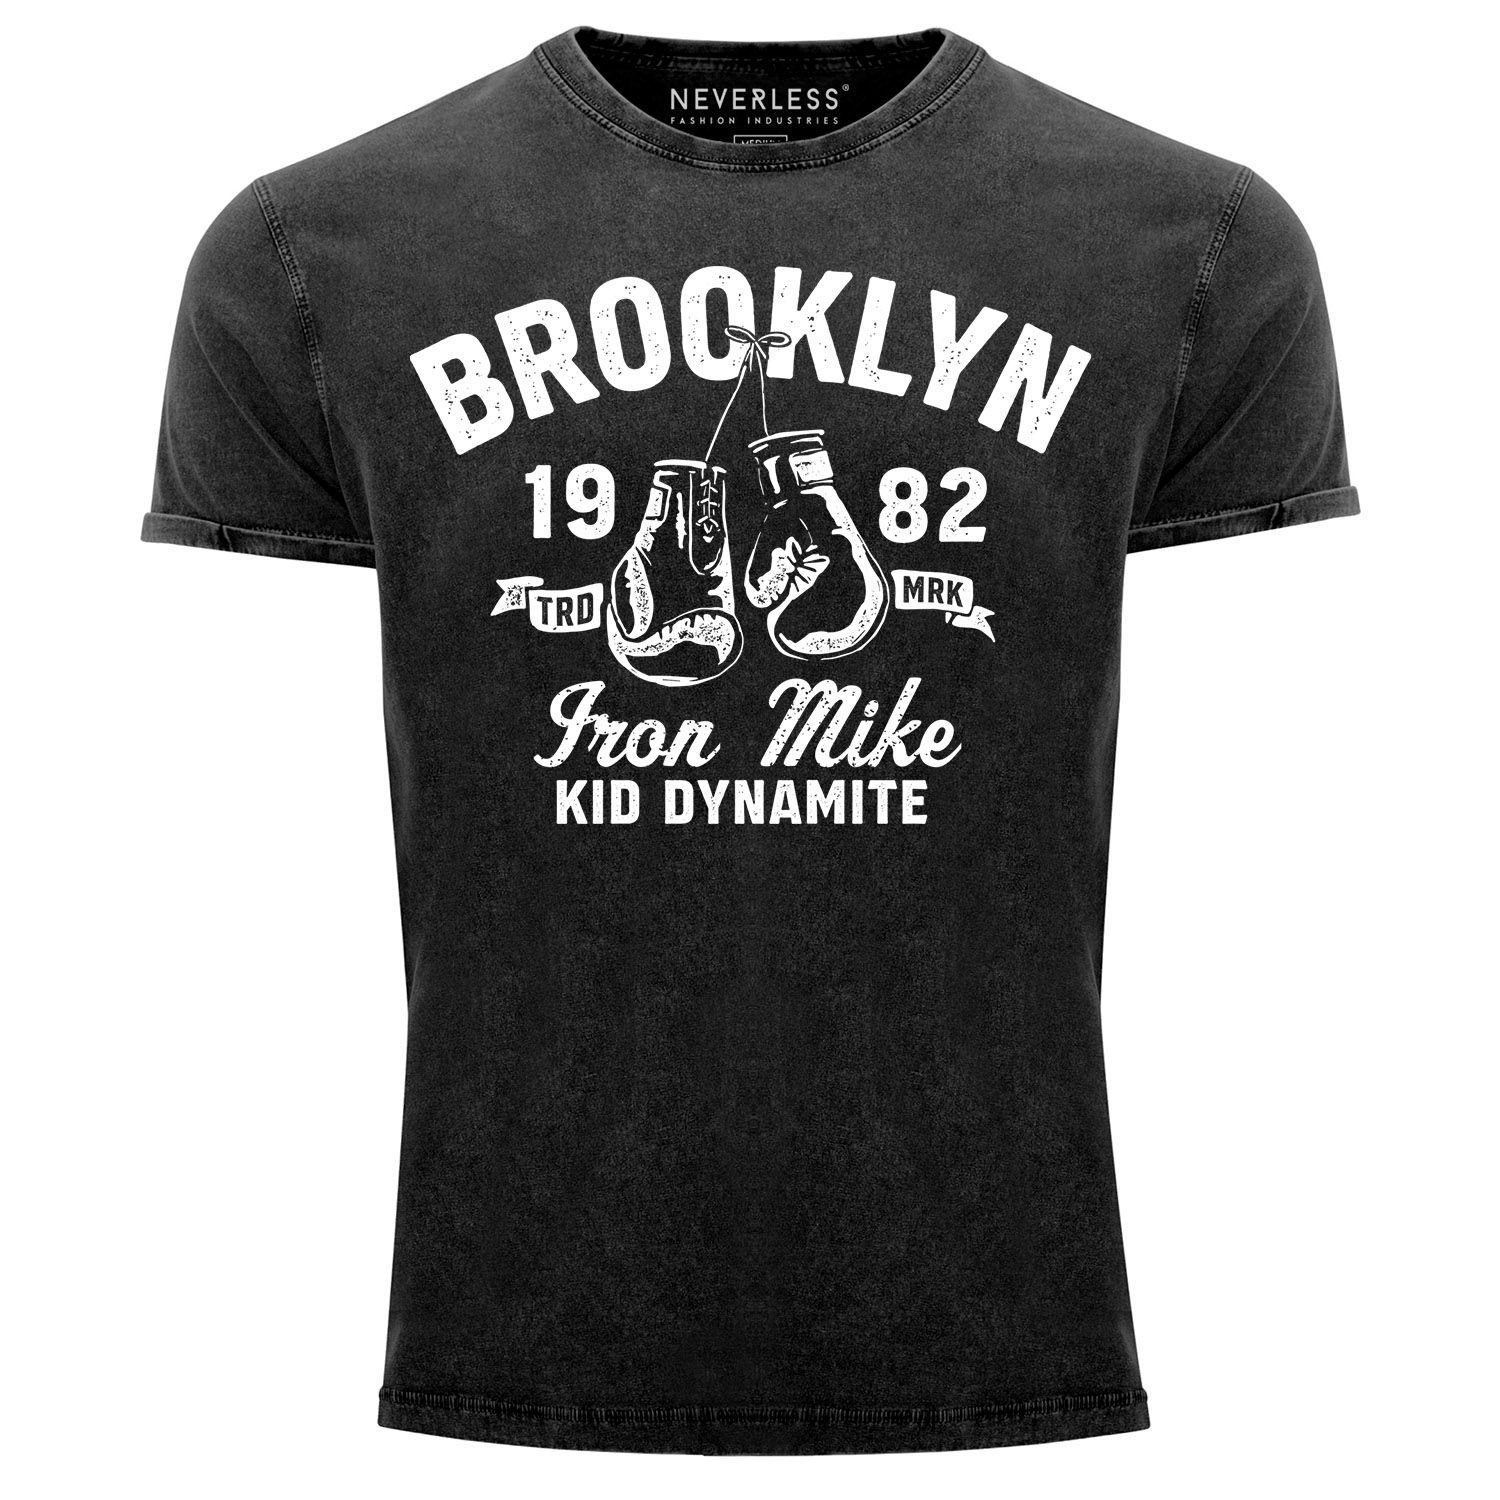 Neverless Print-Shirt Herren Vintage Shirt Boxen Iron Mike Brooklyn Retro Design Printshirt T-Shirt Aufdruck Used Look Neverless® mit Print